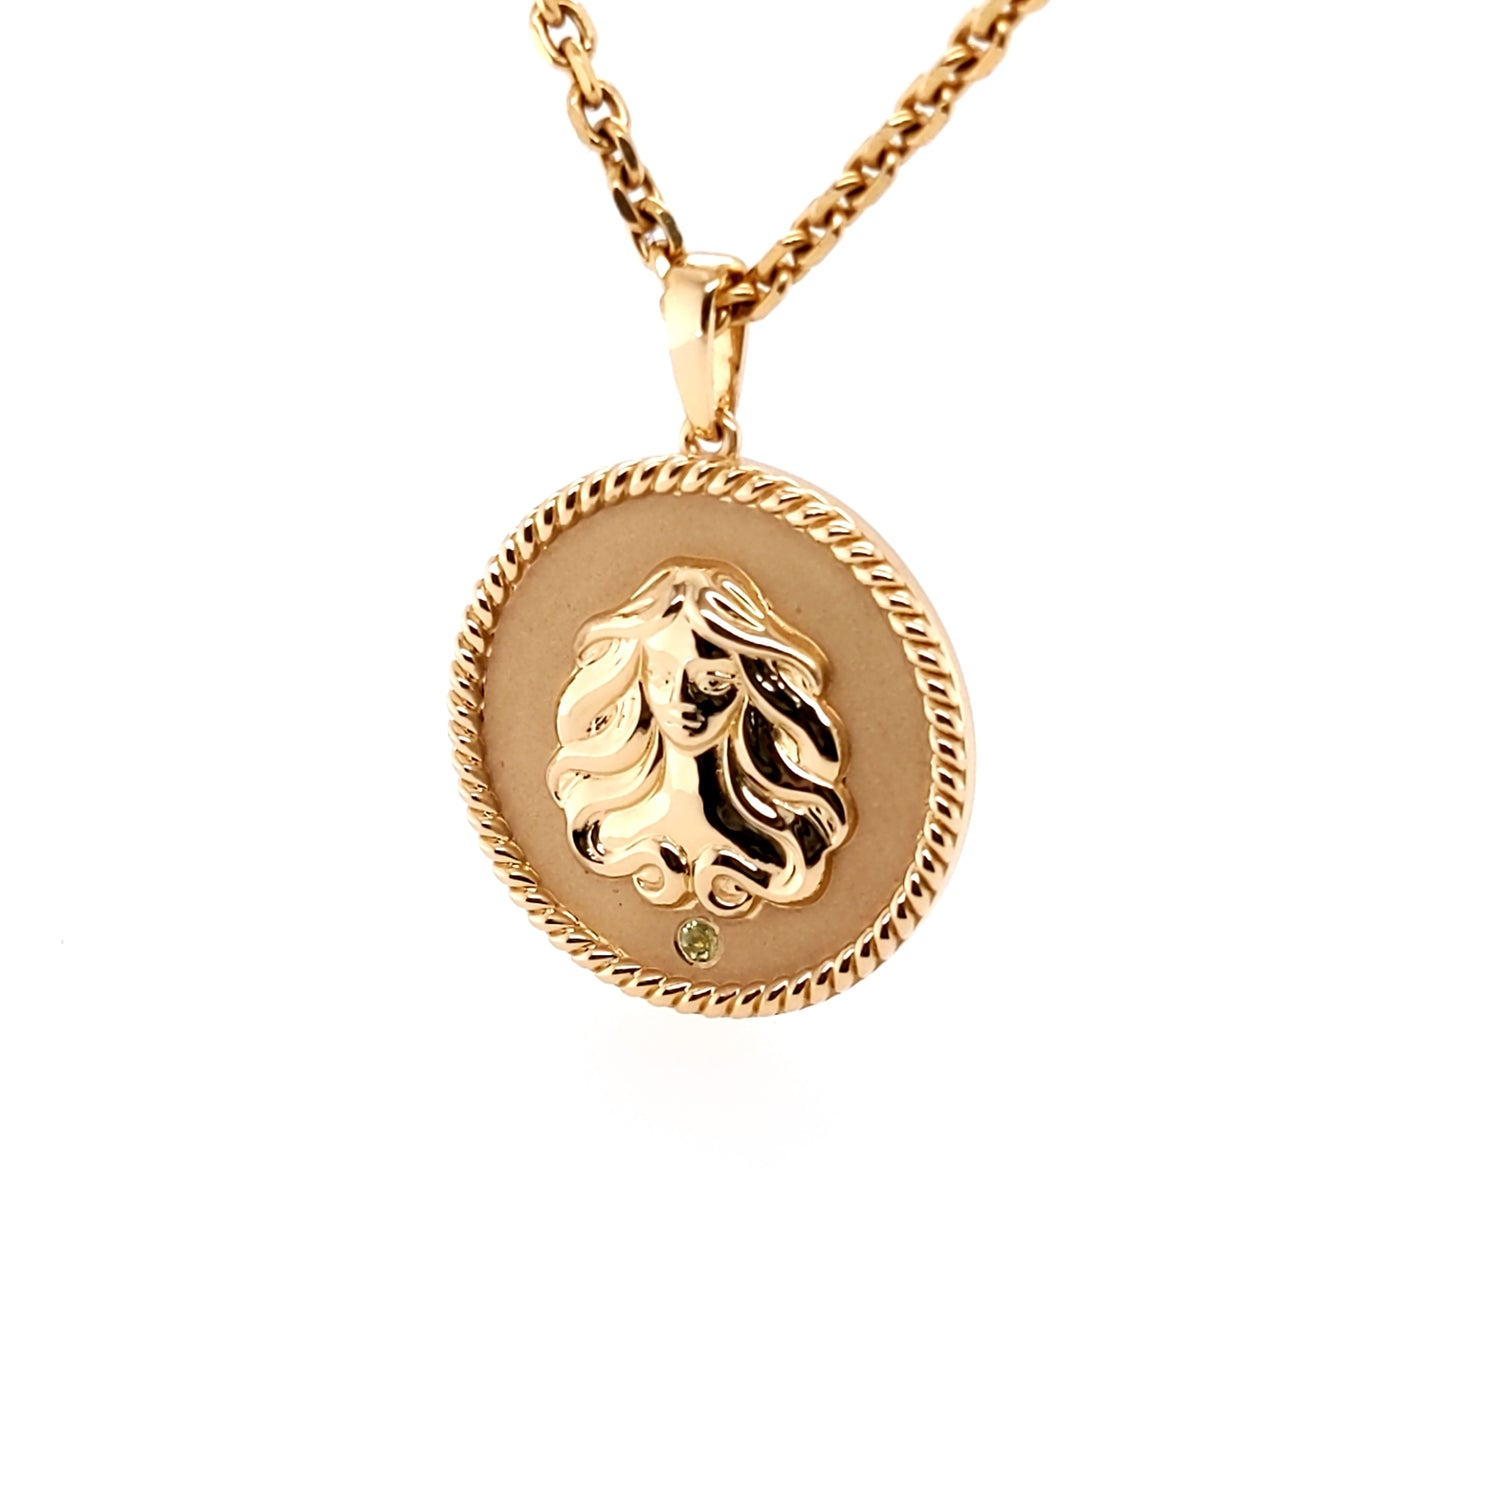 Zodiac Medallion with Birthstone